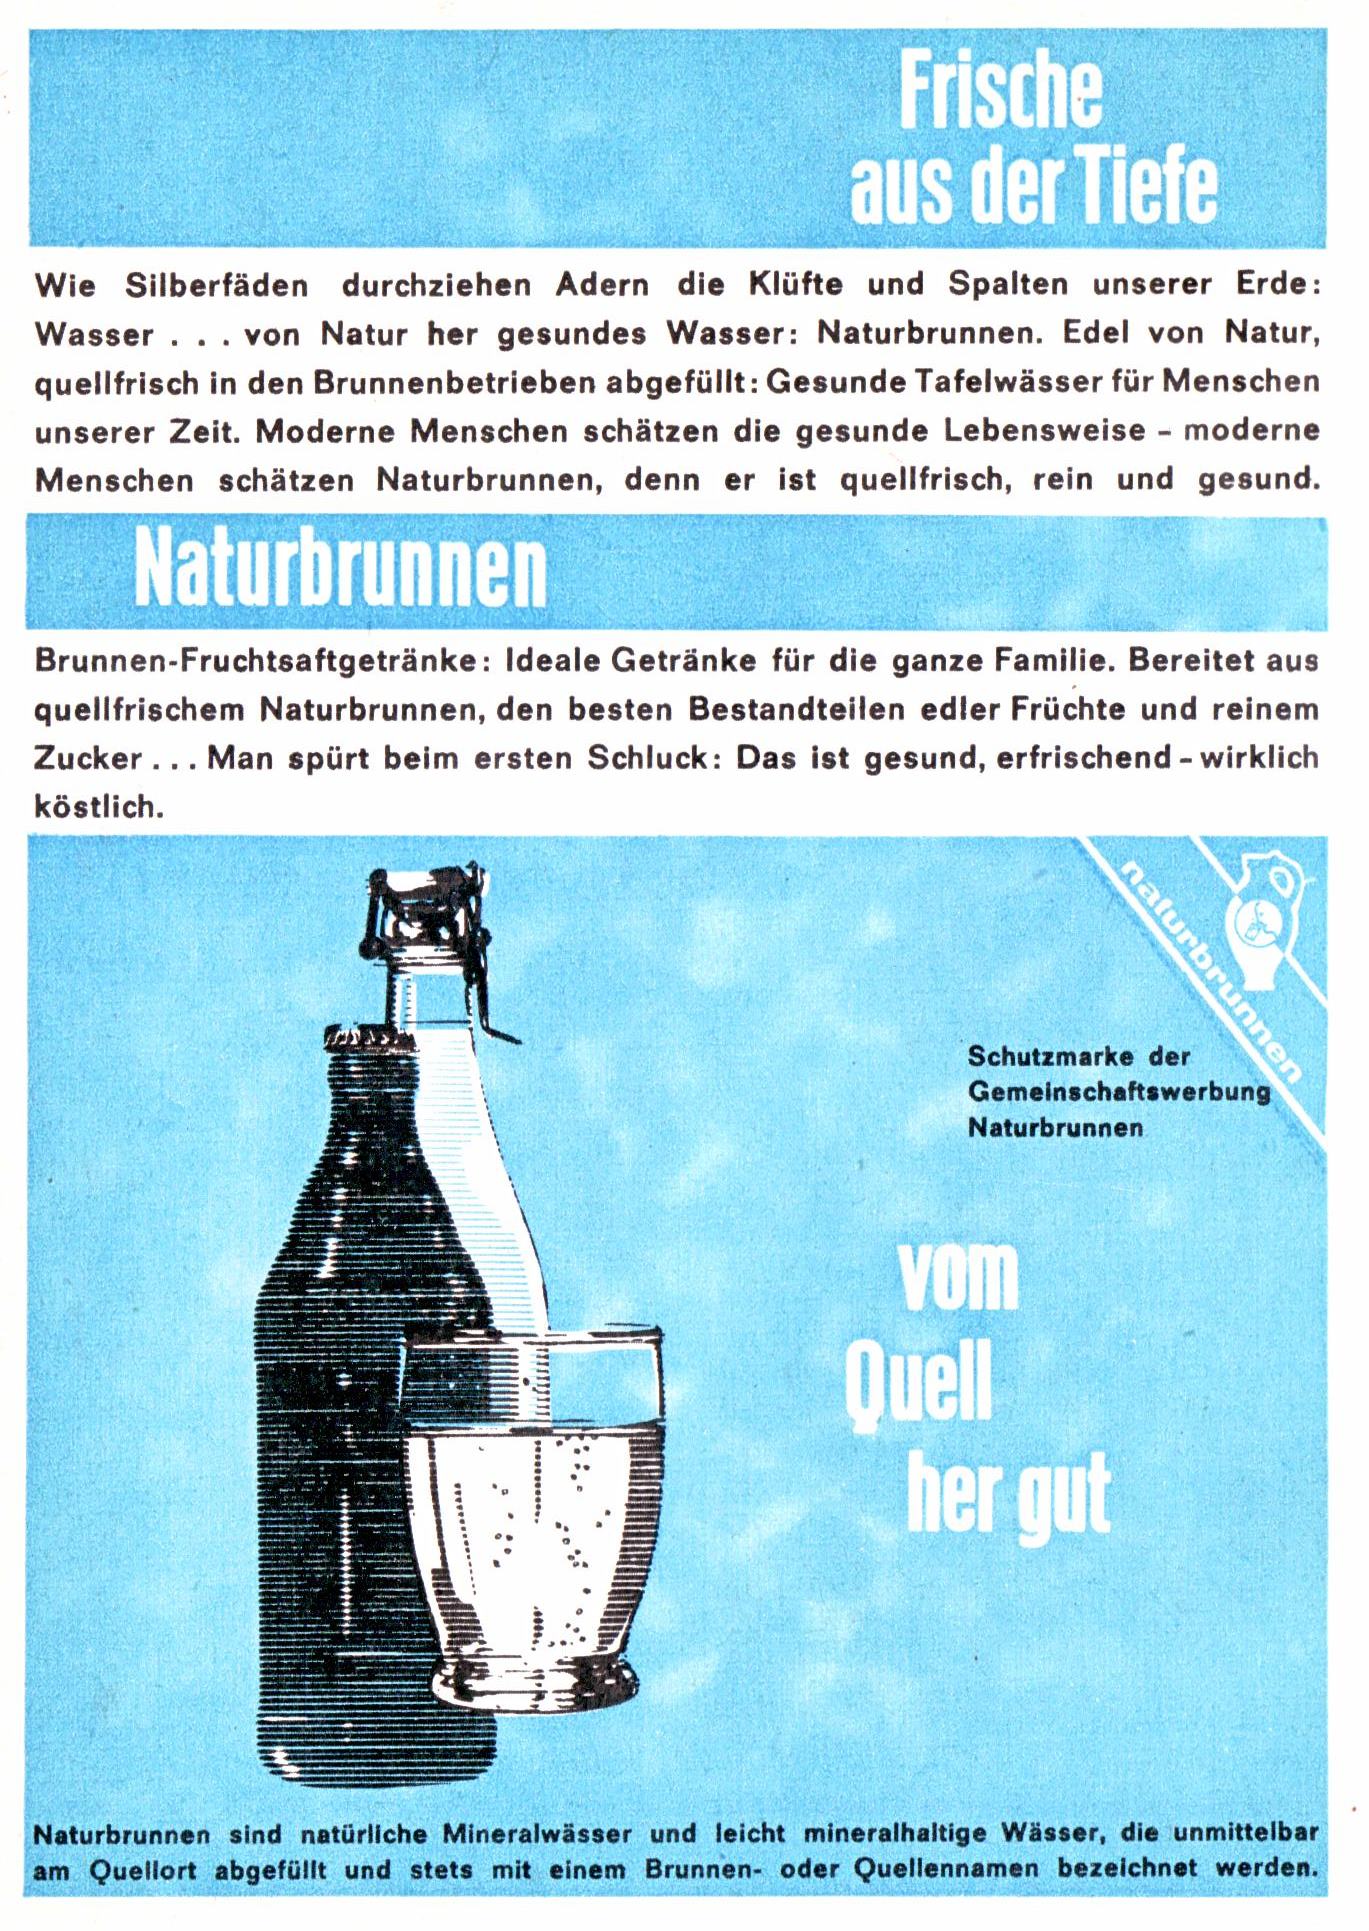 Naturbrunnen Mineralwasser 1962.jpg